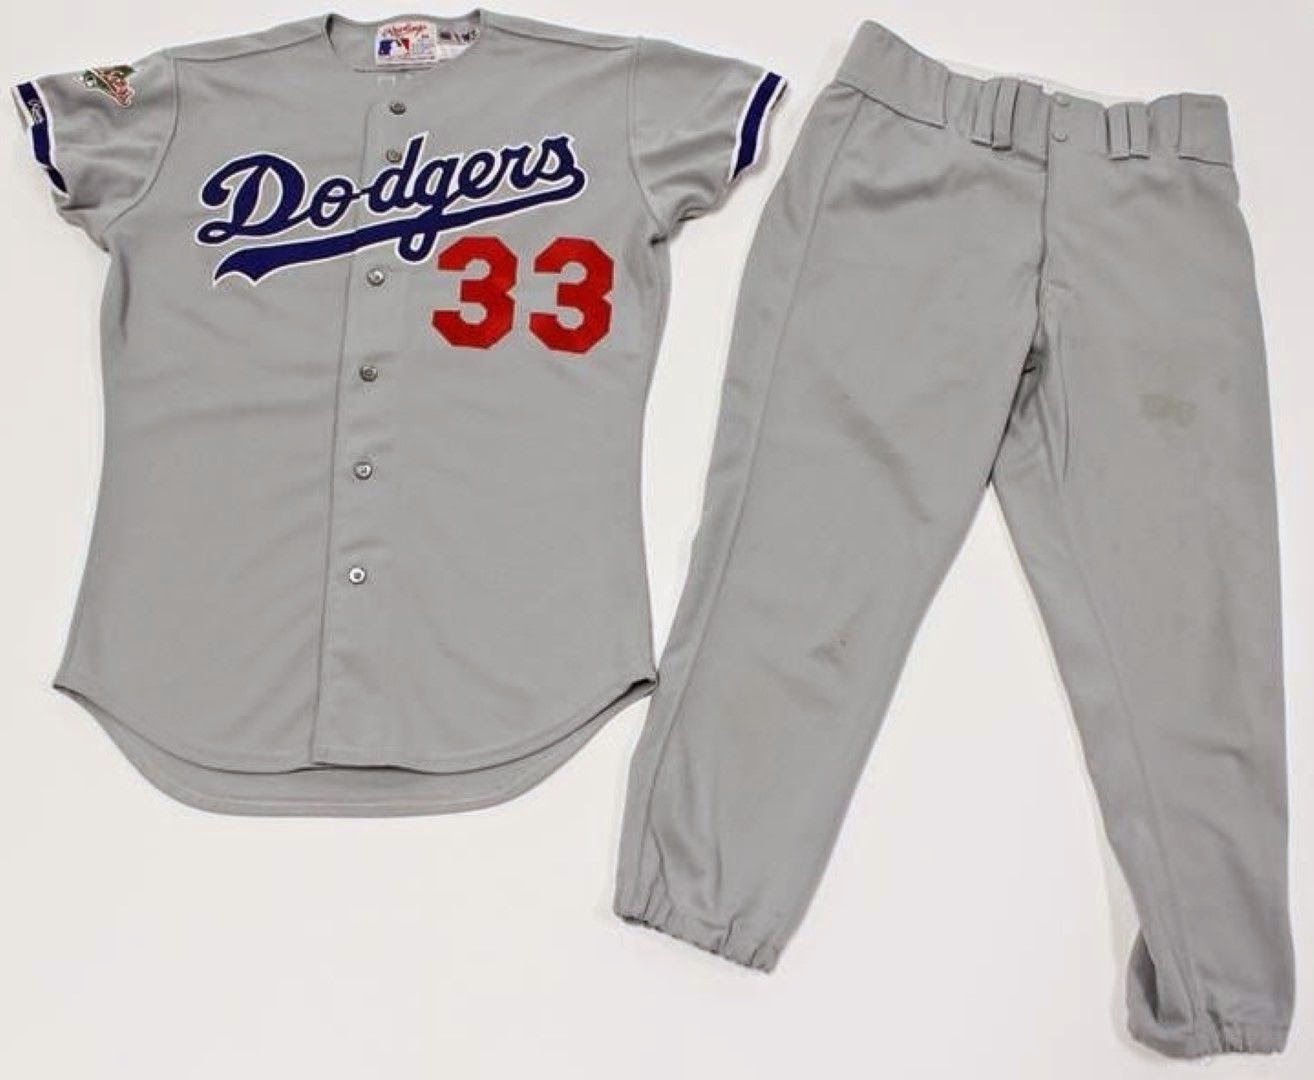 Dodgers Blue Heaven: Jeff Hamilton's 1988 WS Trophy and Game-Worn Uniform  at Worthridge Auctions